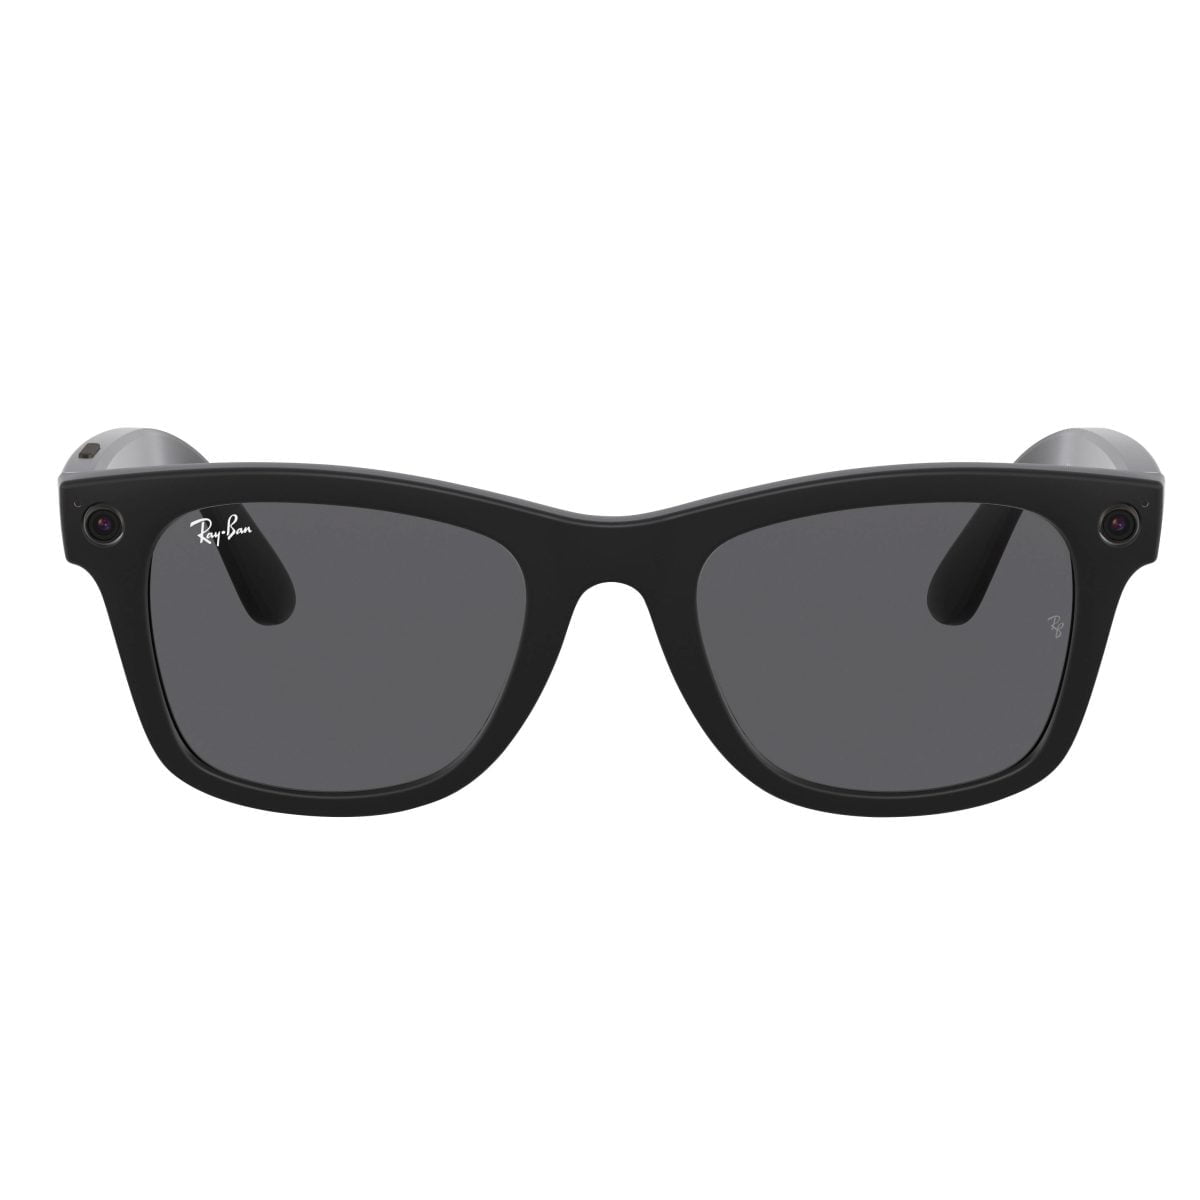 Ray Ban Stories Wayfarer Smart Glasses 53Mm Matte Black/Dark Grey